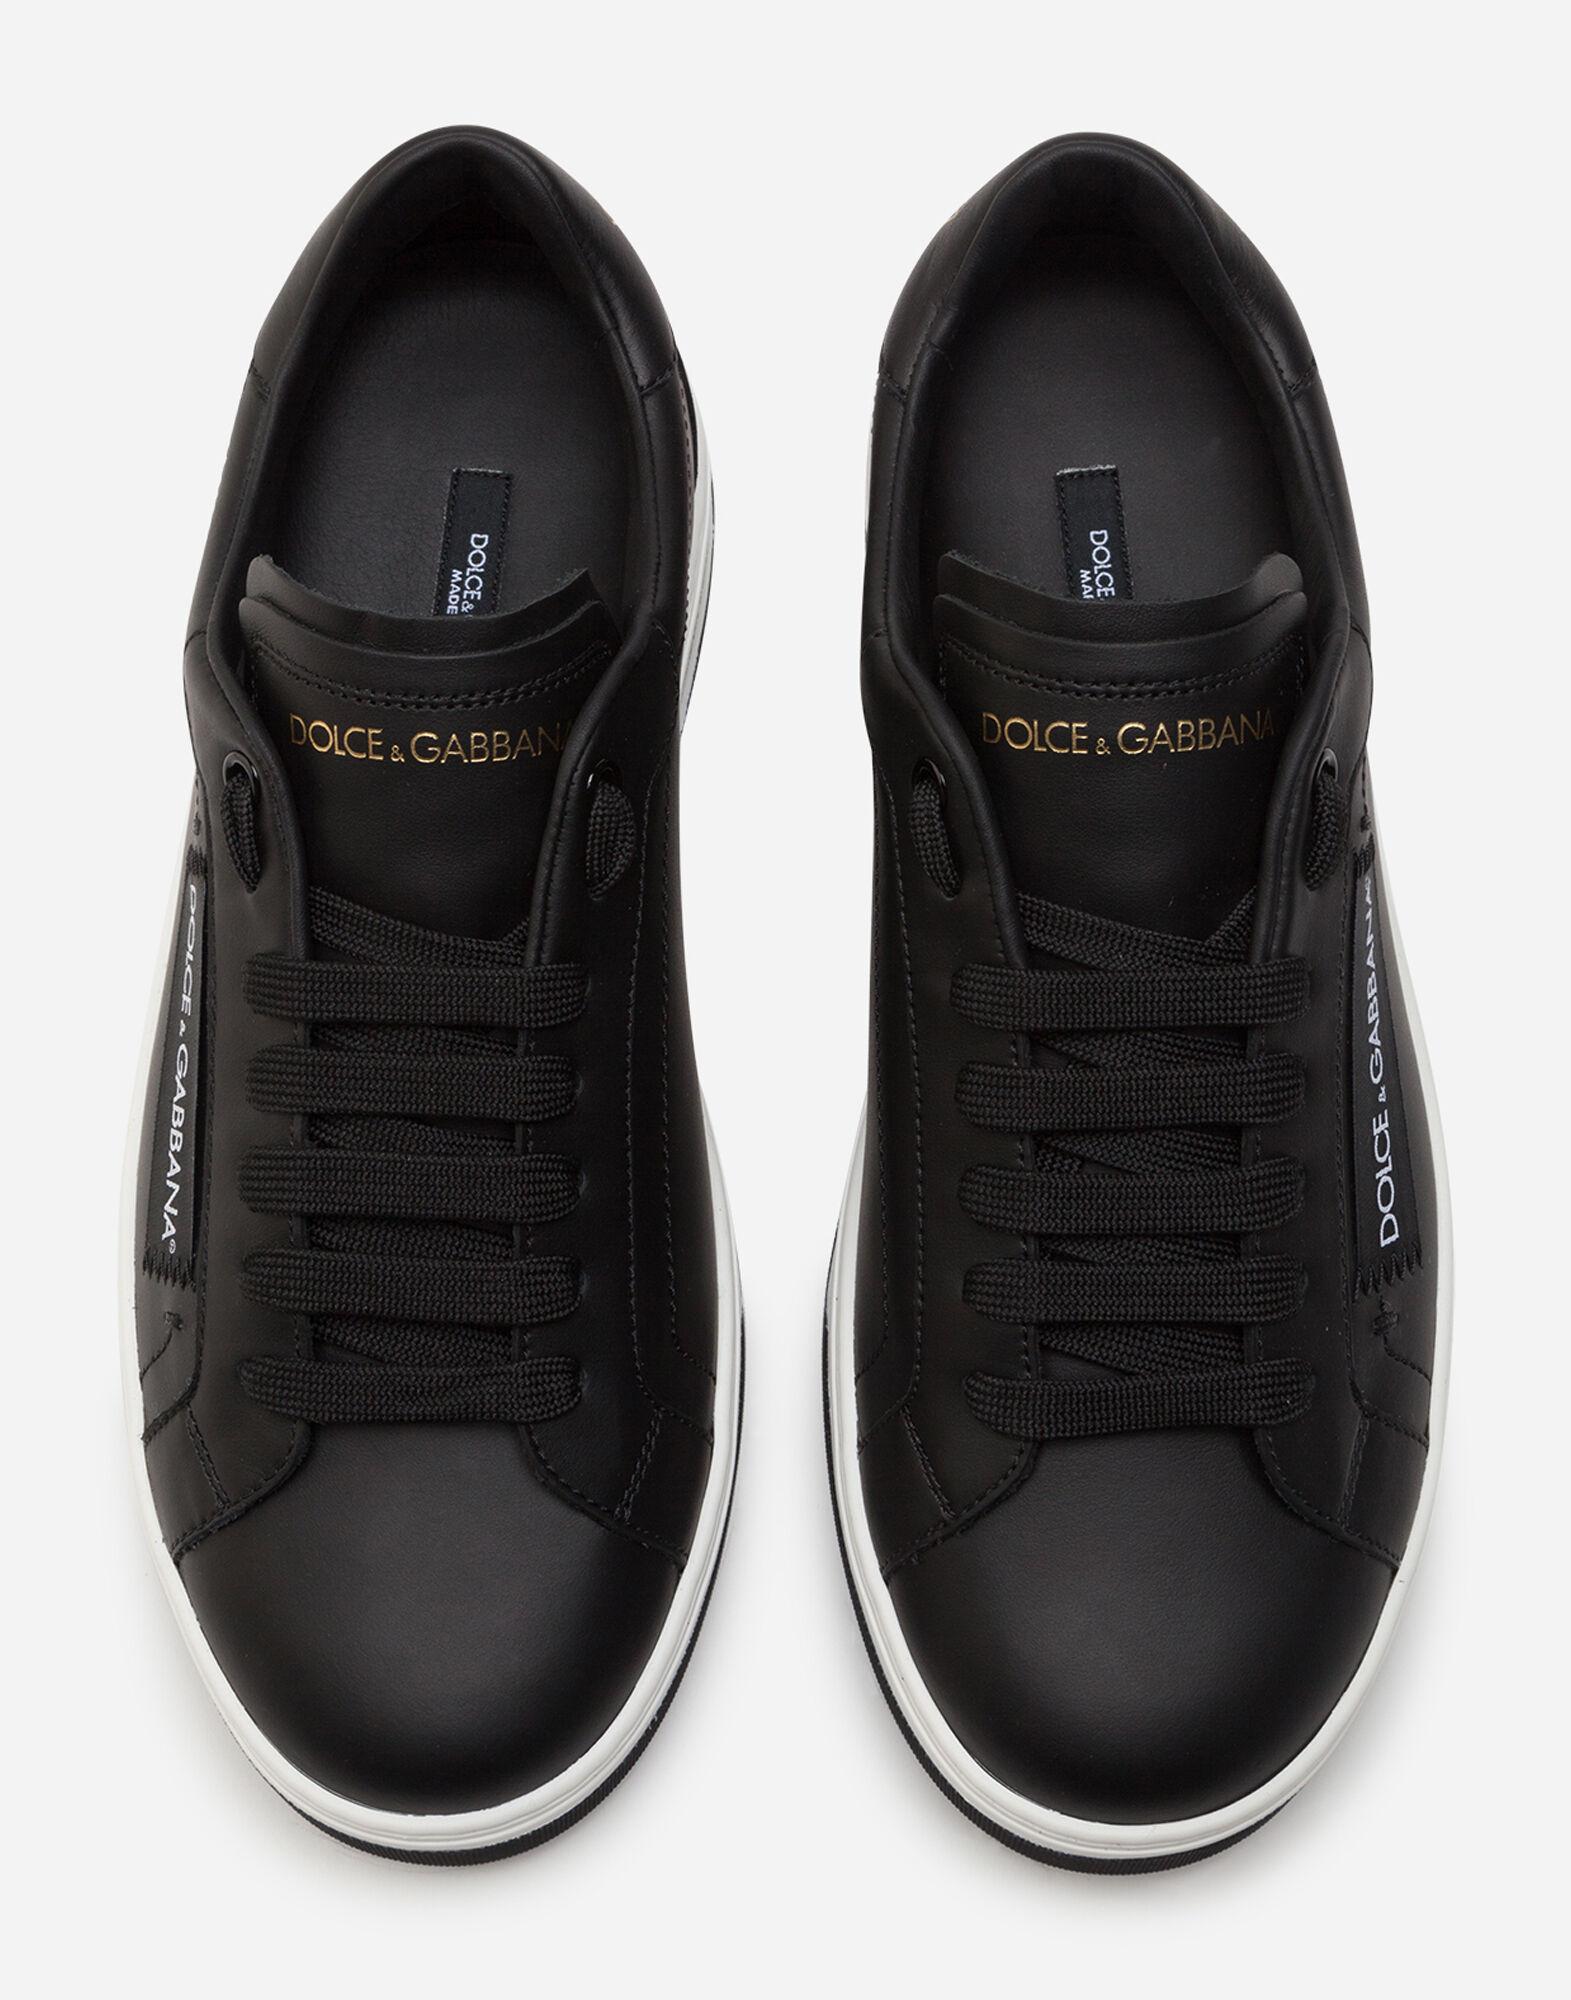 Dolce & Gabbana Leather Roma Sneakers In Printed Nappa Calfskin in ...